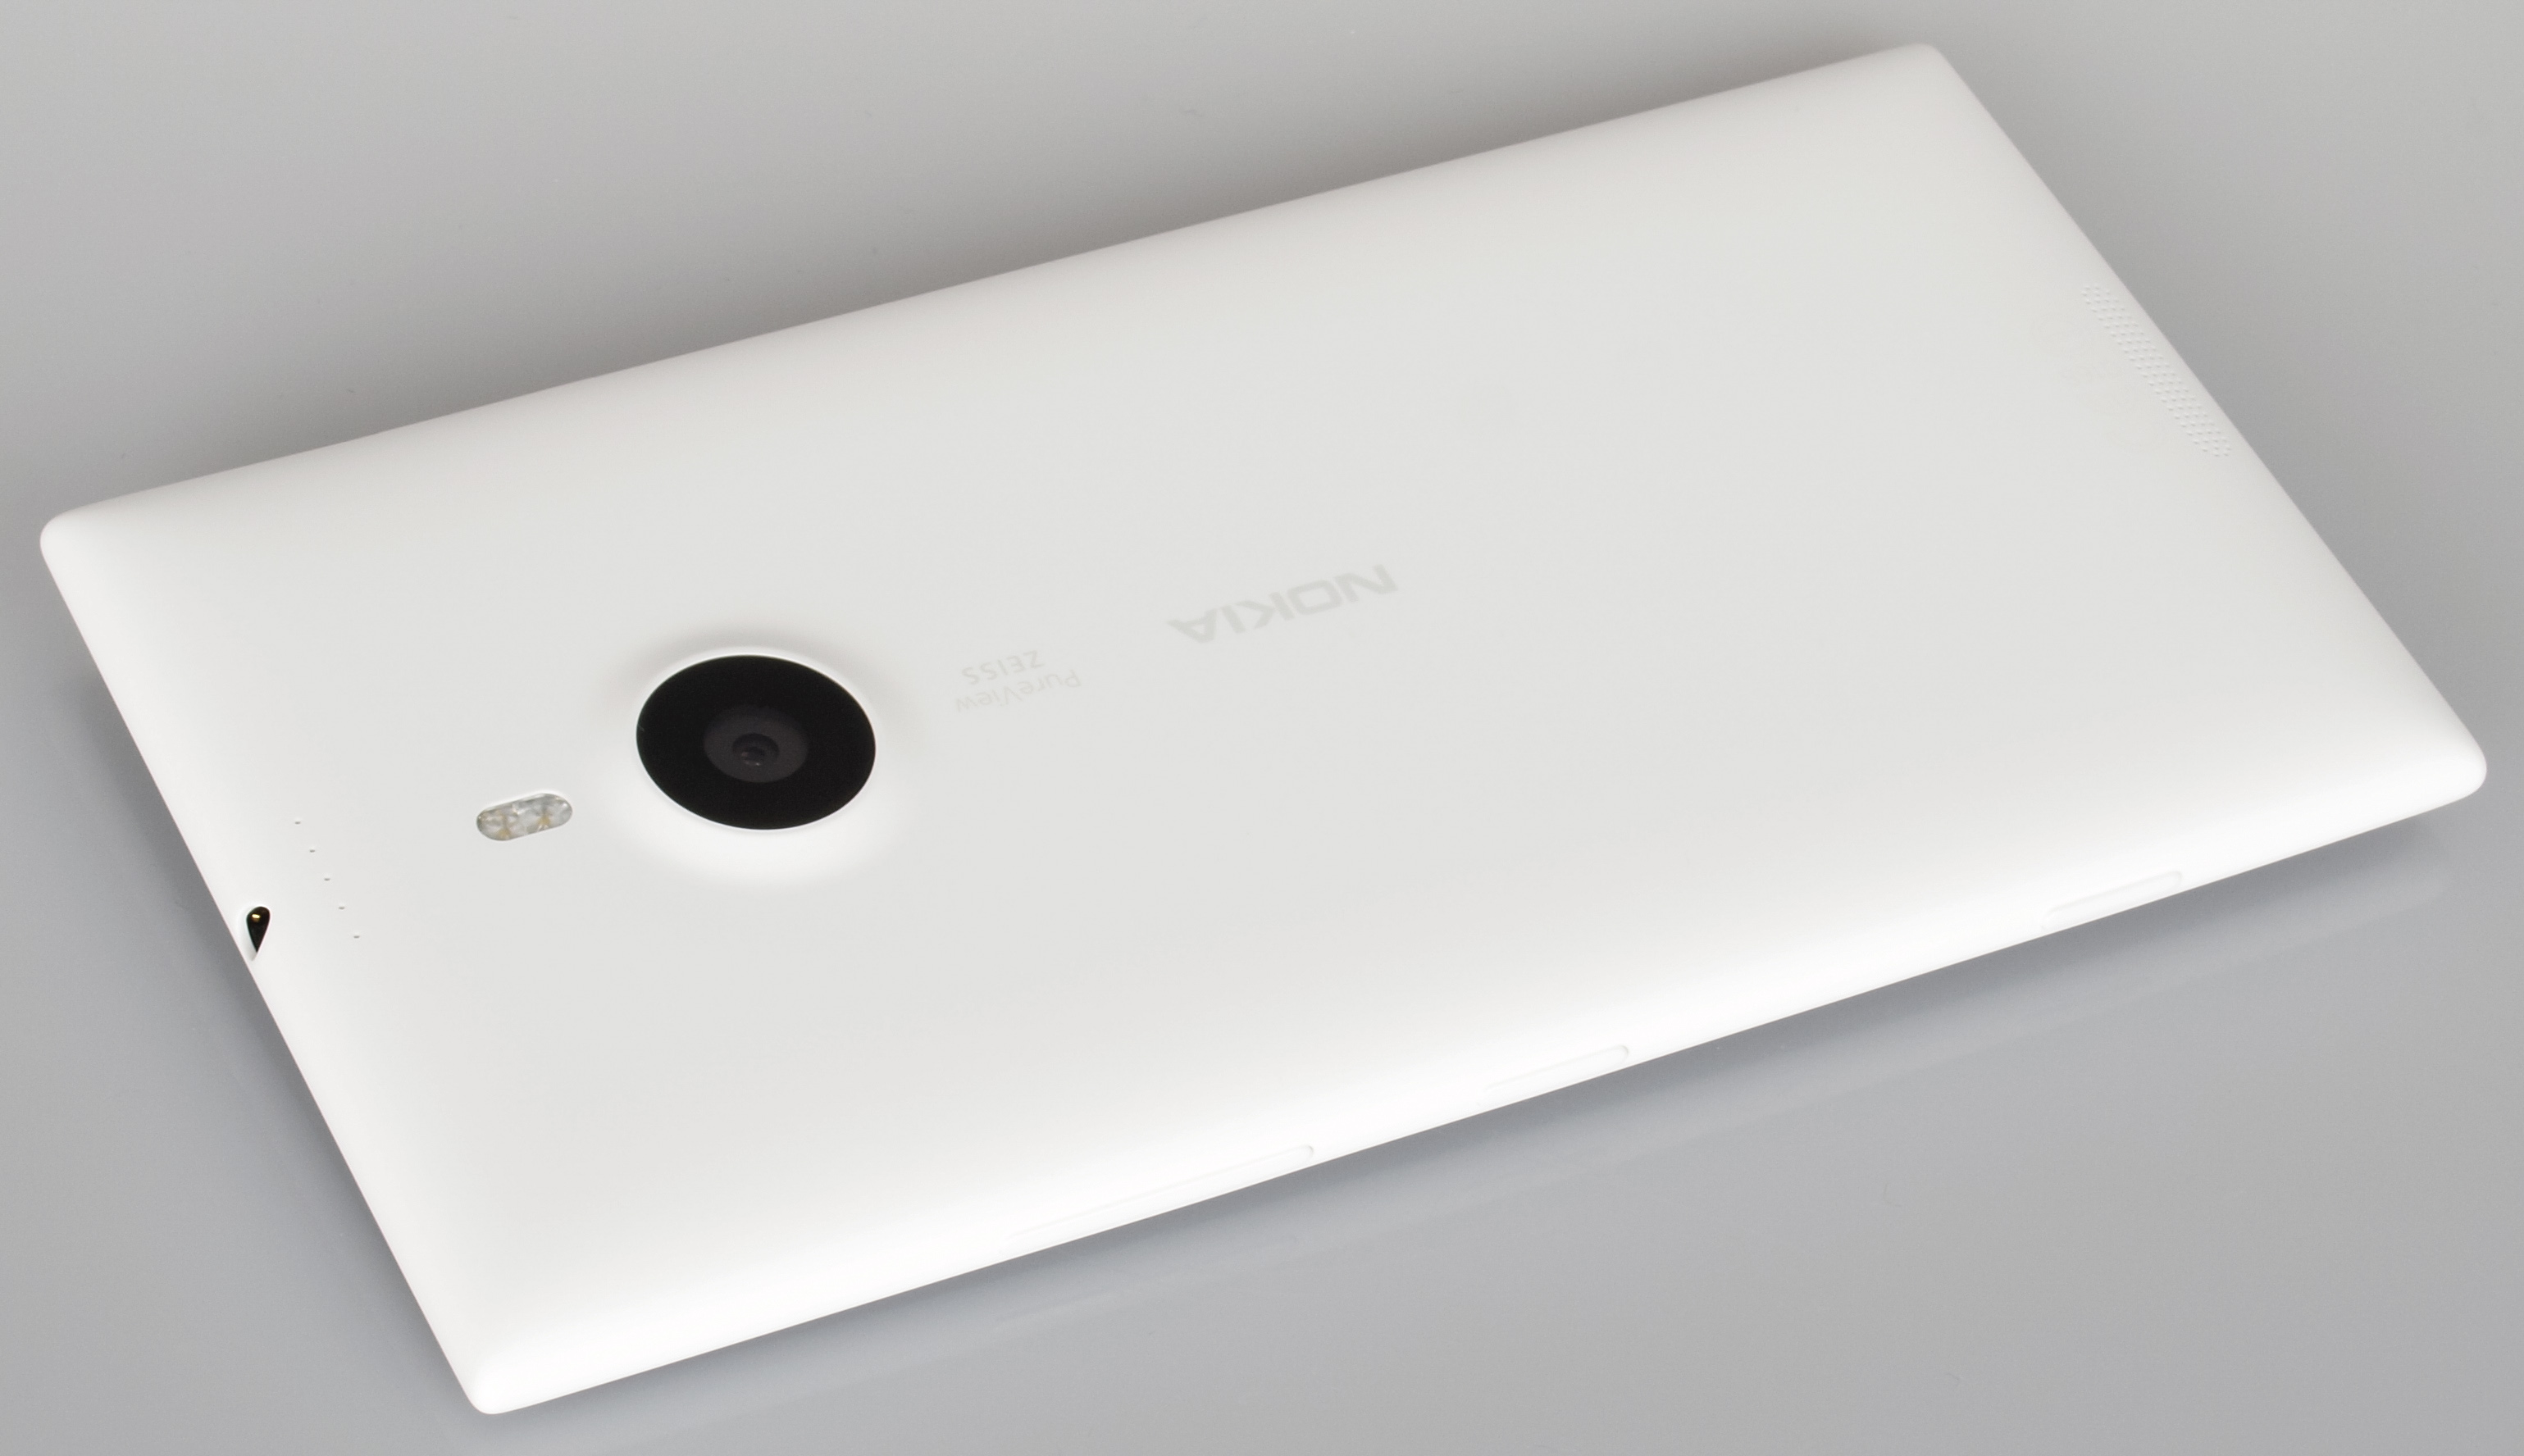 Demo: inregistrare video 4k pe Nokia Lumia 1520